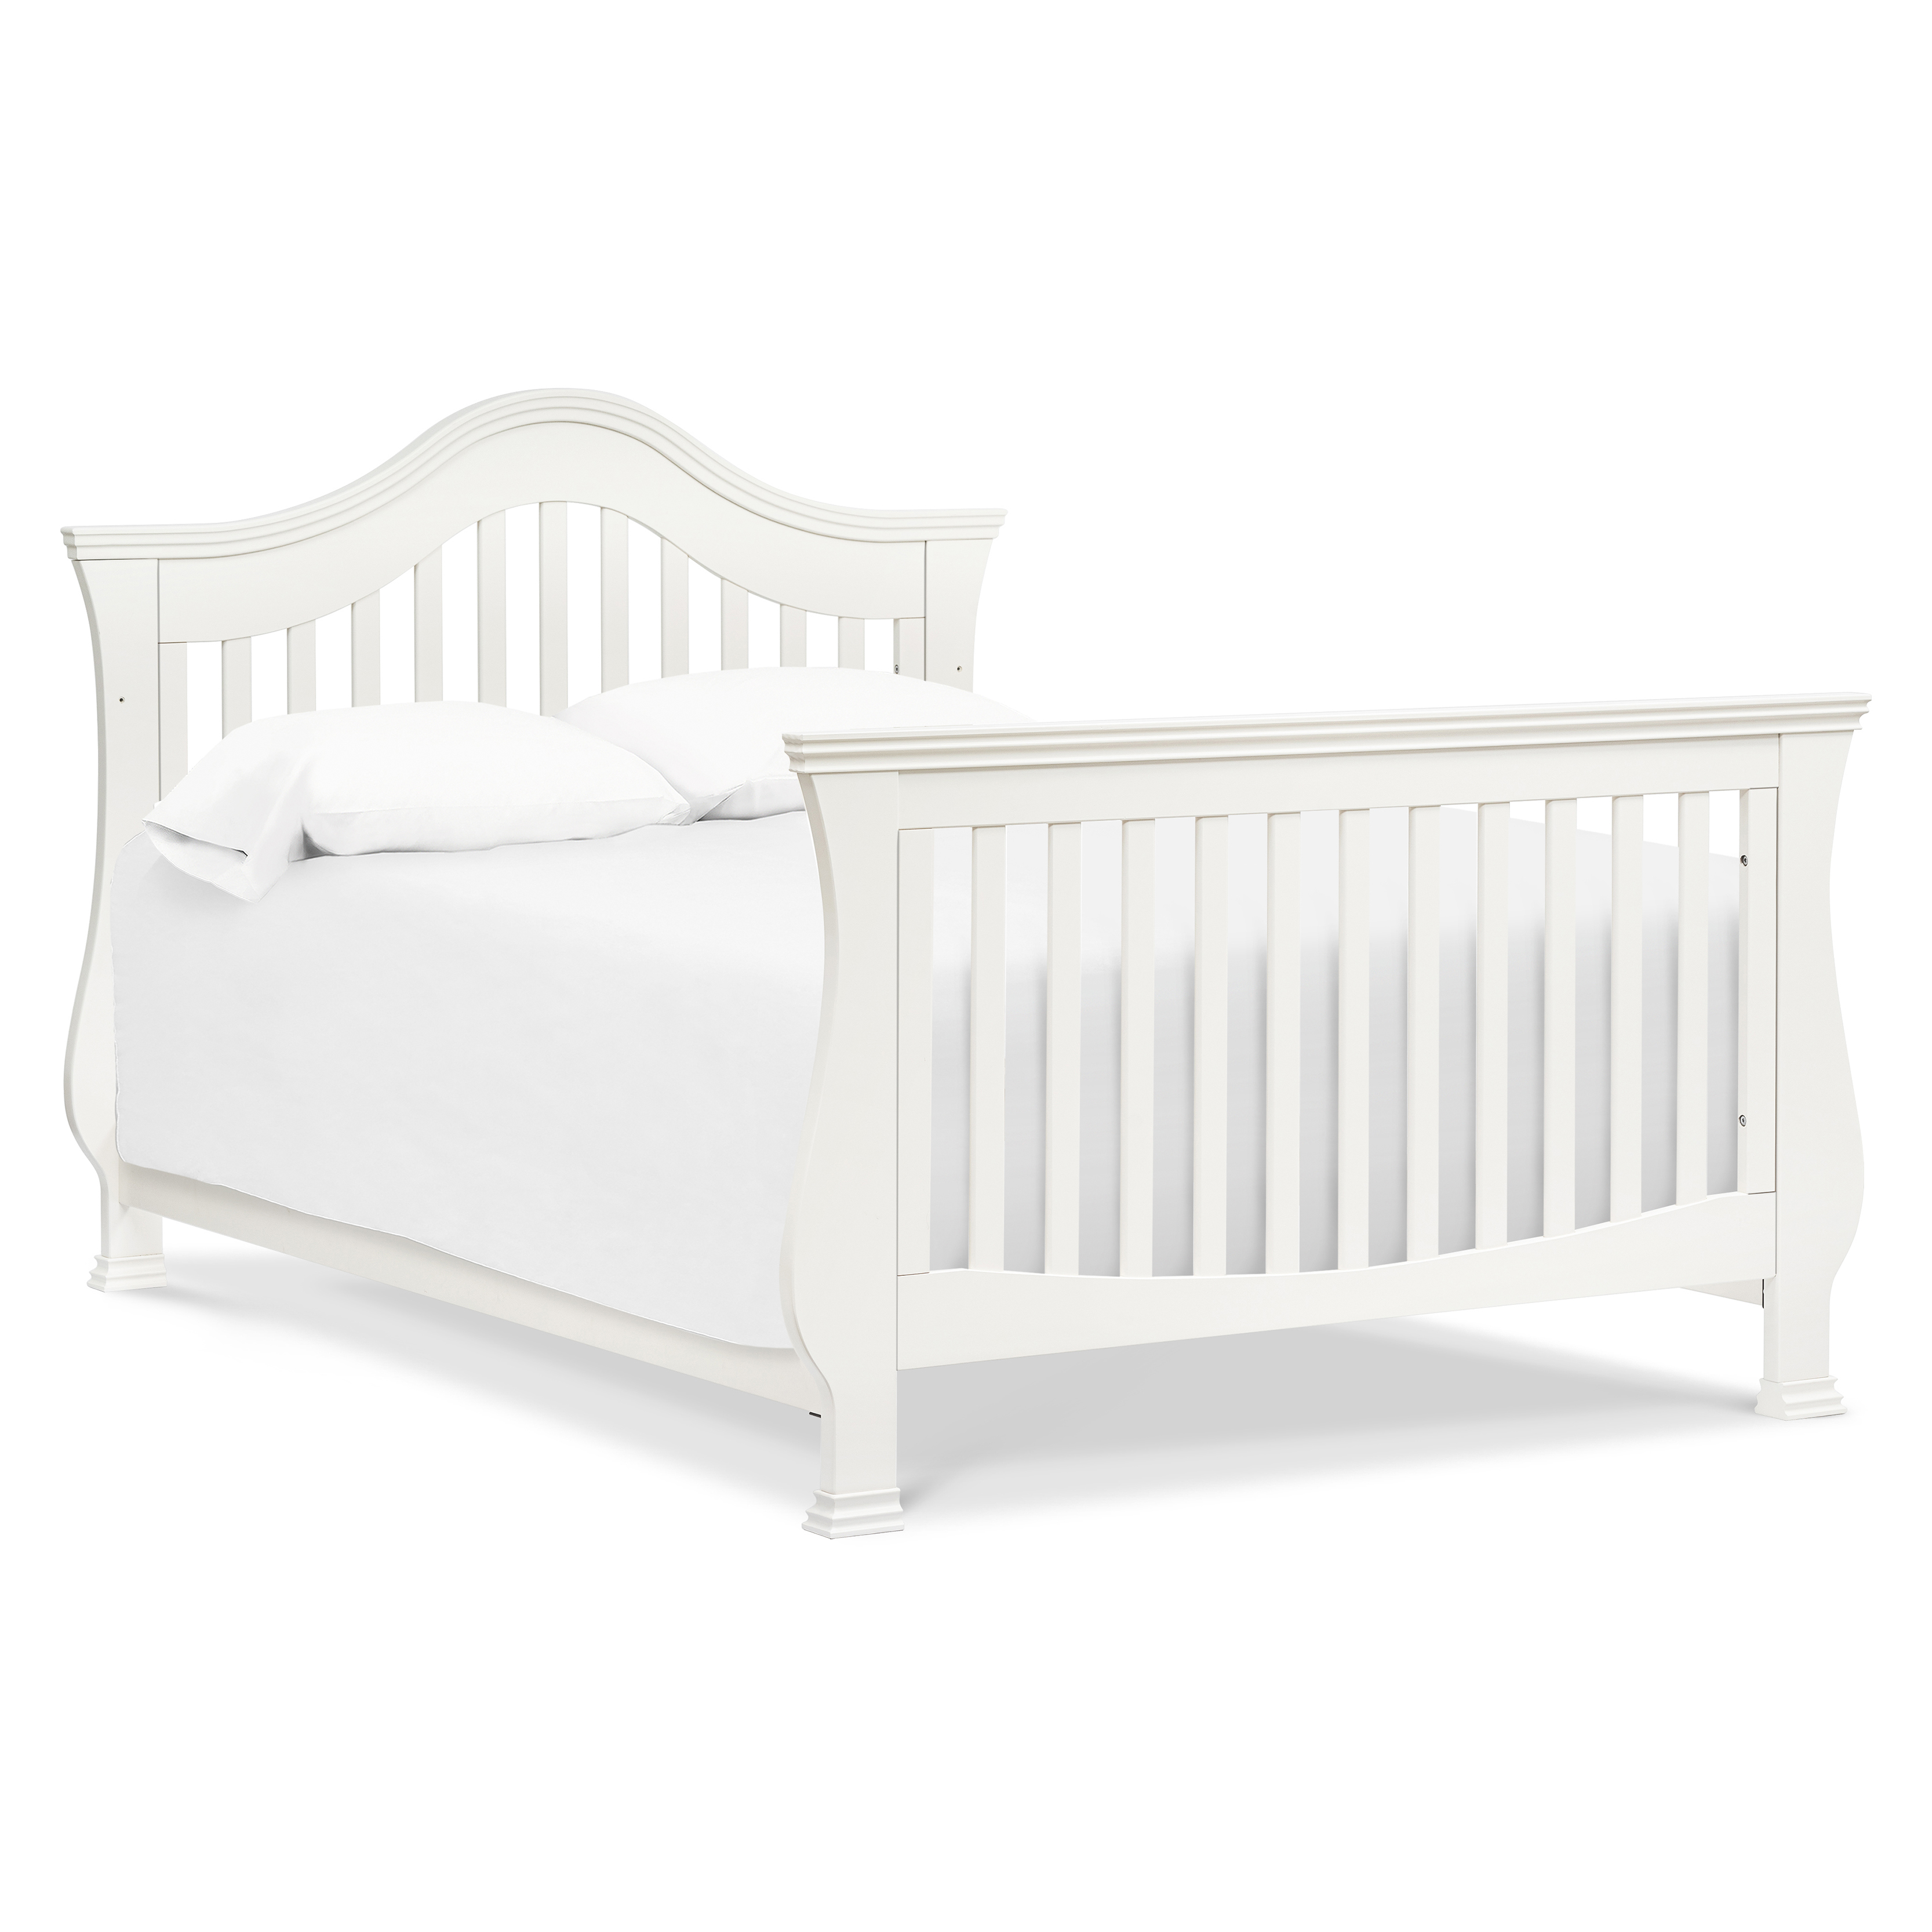 Namesake Ashbury 4-in-1 Convertible Crib in Warm White - image 5 of 6